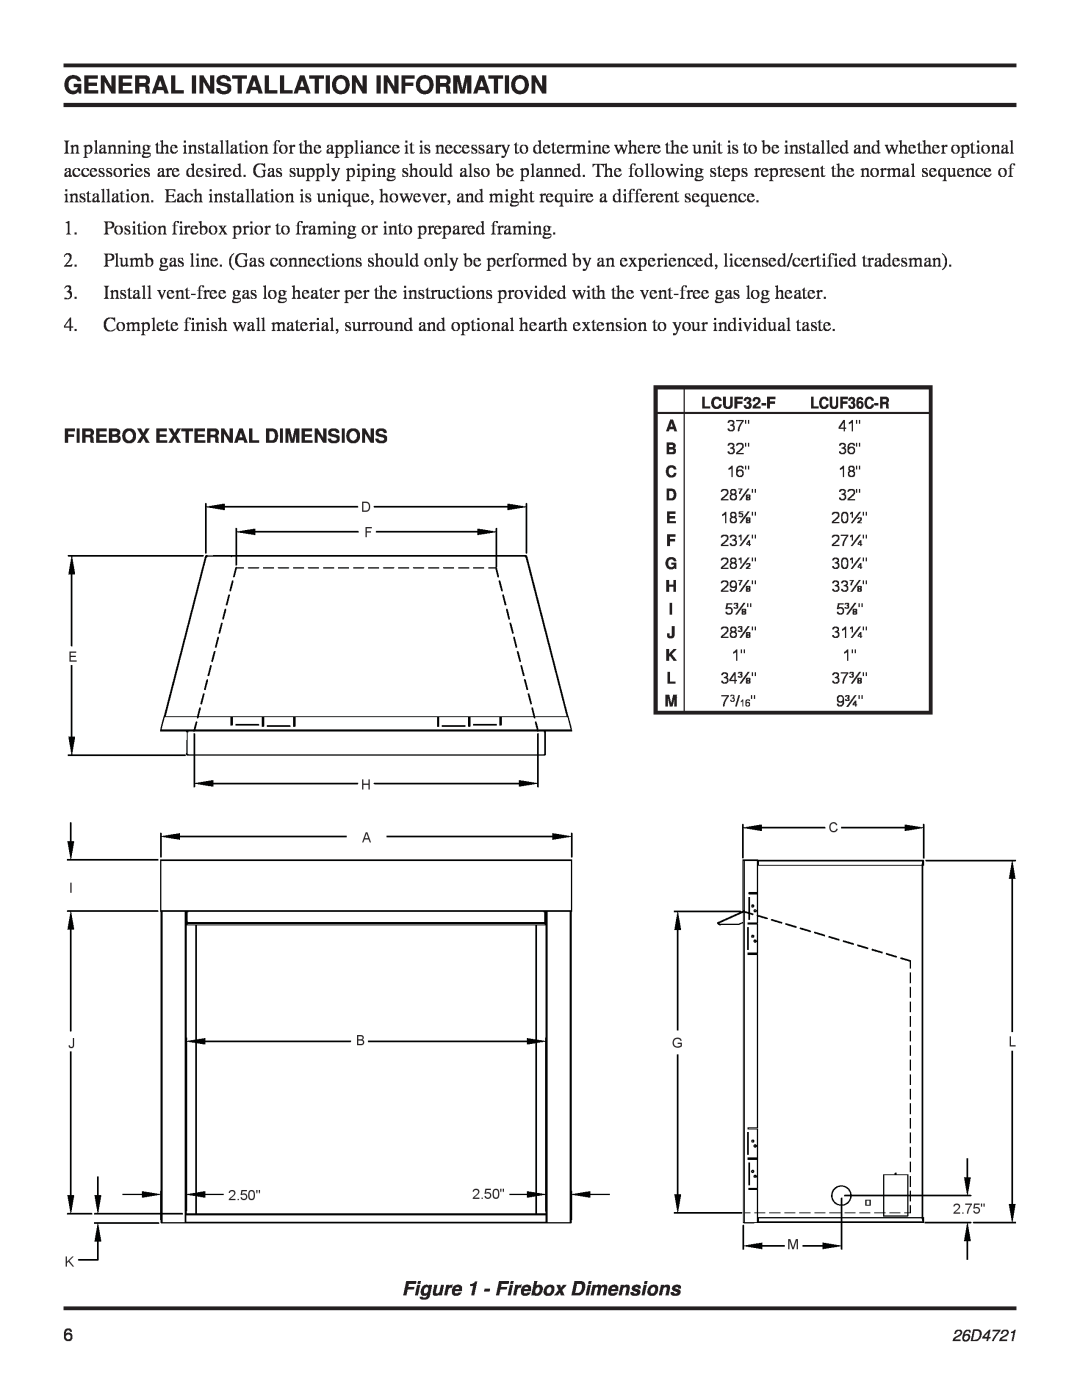 Monessen Hearth LCUF32-F dimensions General Installation Information, Firebox External Dimensions, Firebox Dimensions 